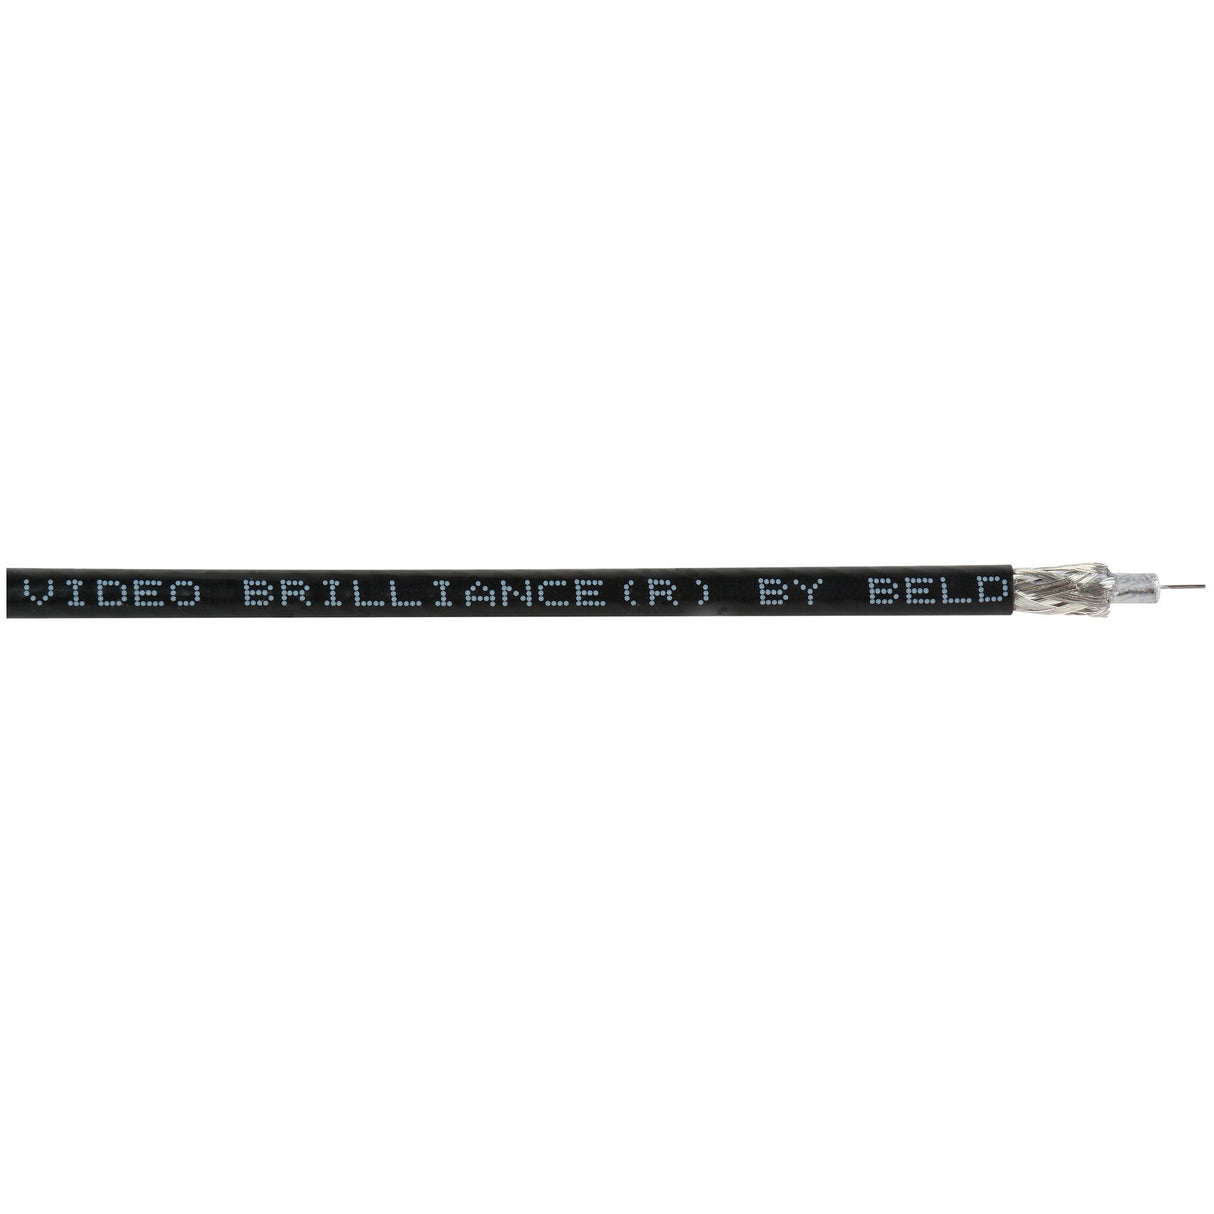 Belden 4855R 12G-SDI 75 Ohm 4K UHD Mini RG-59 Coax Video Cable, Black, 1000-Feet